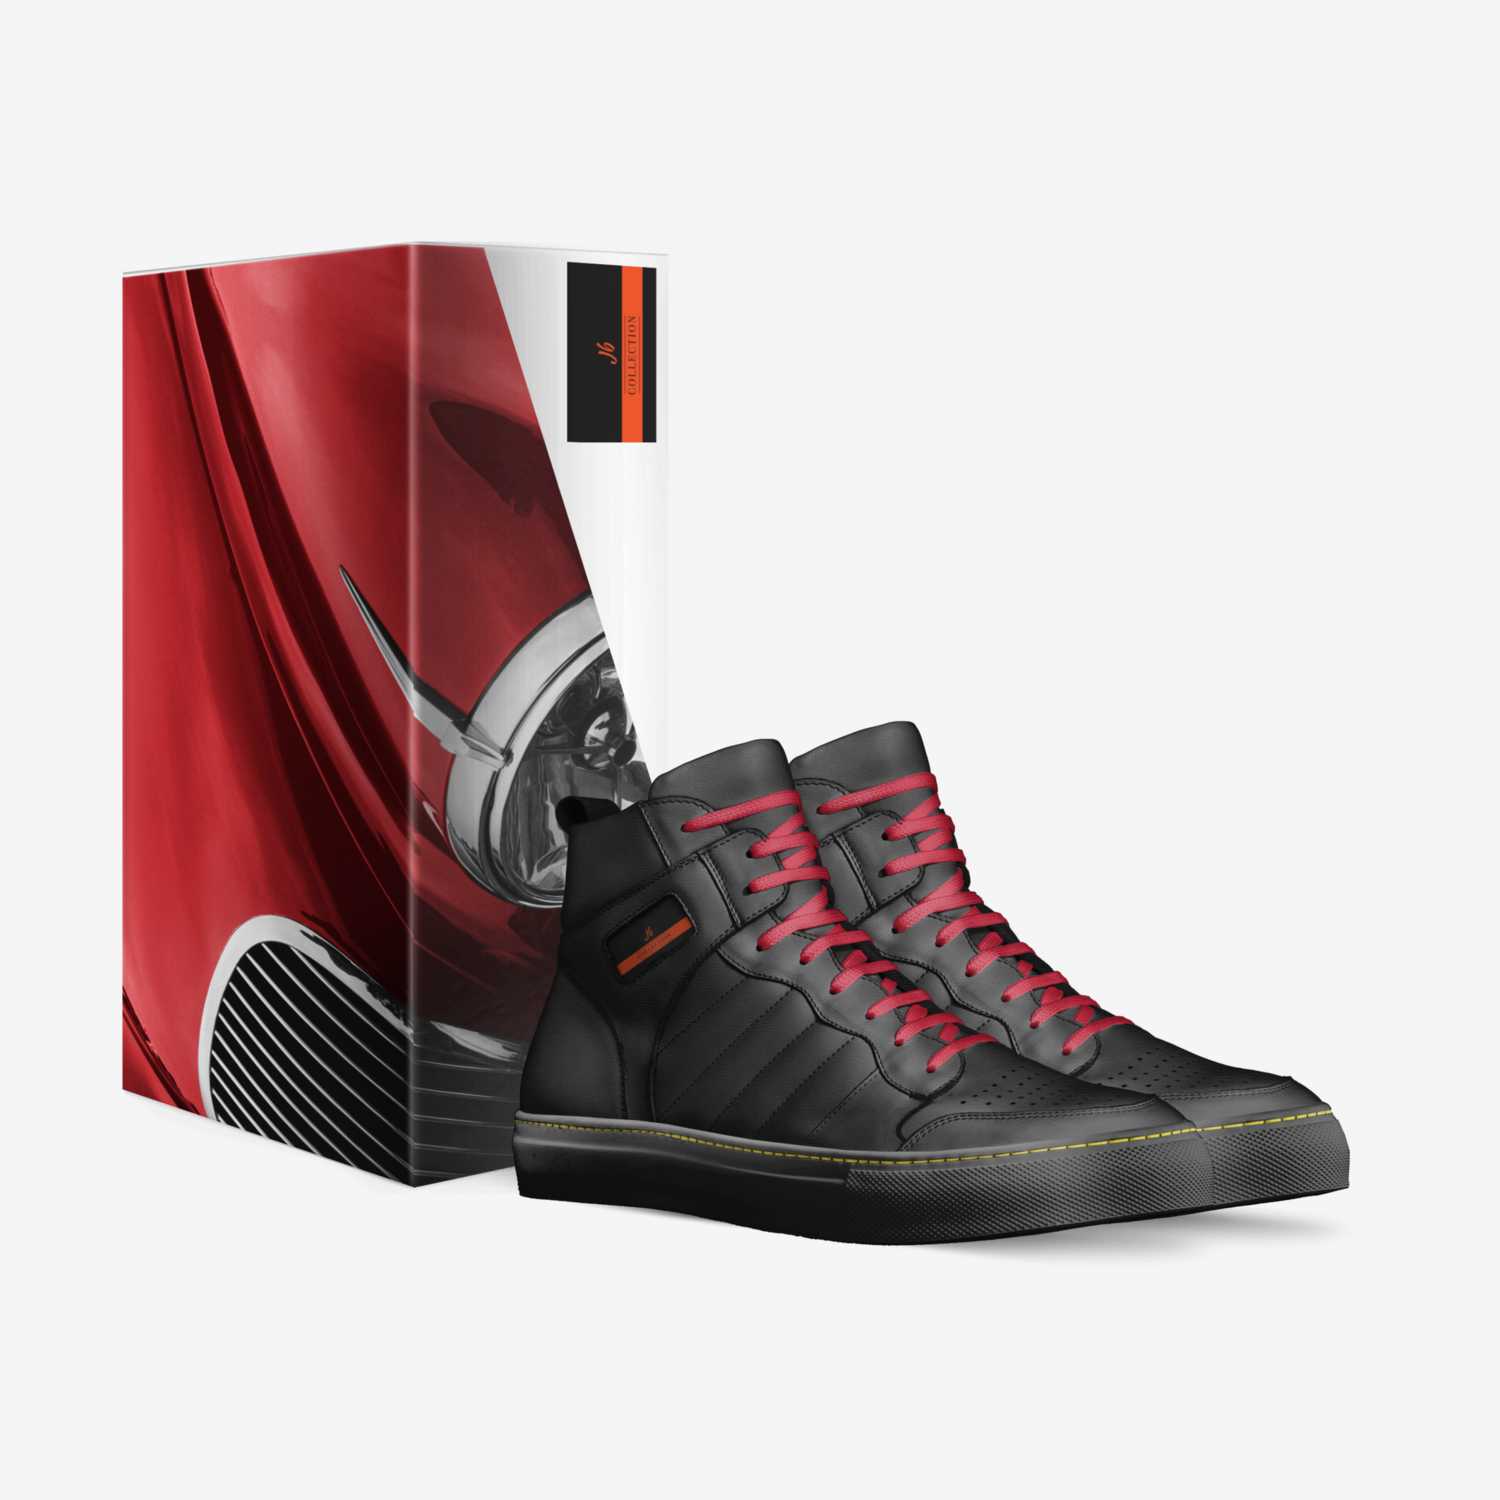 Jb custom made in Italy shoes by Bradin Grady | Box view